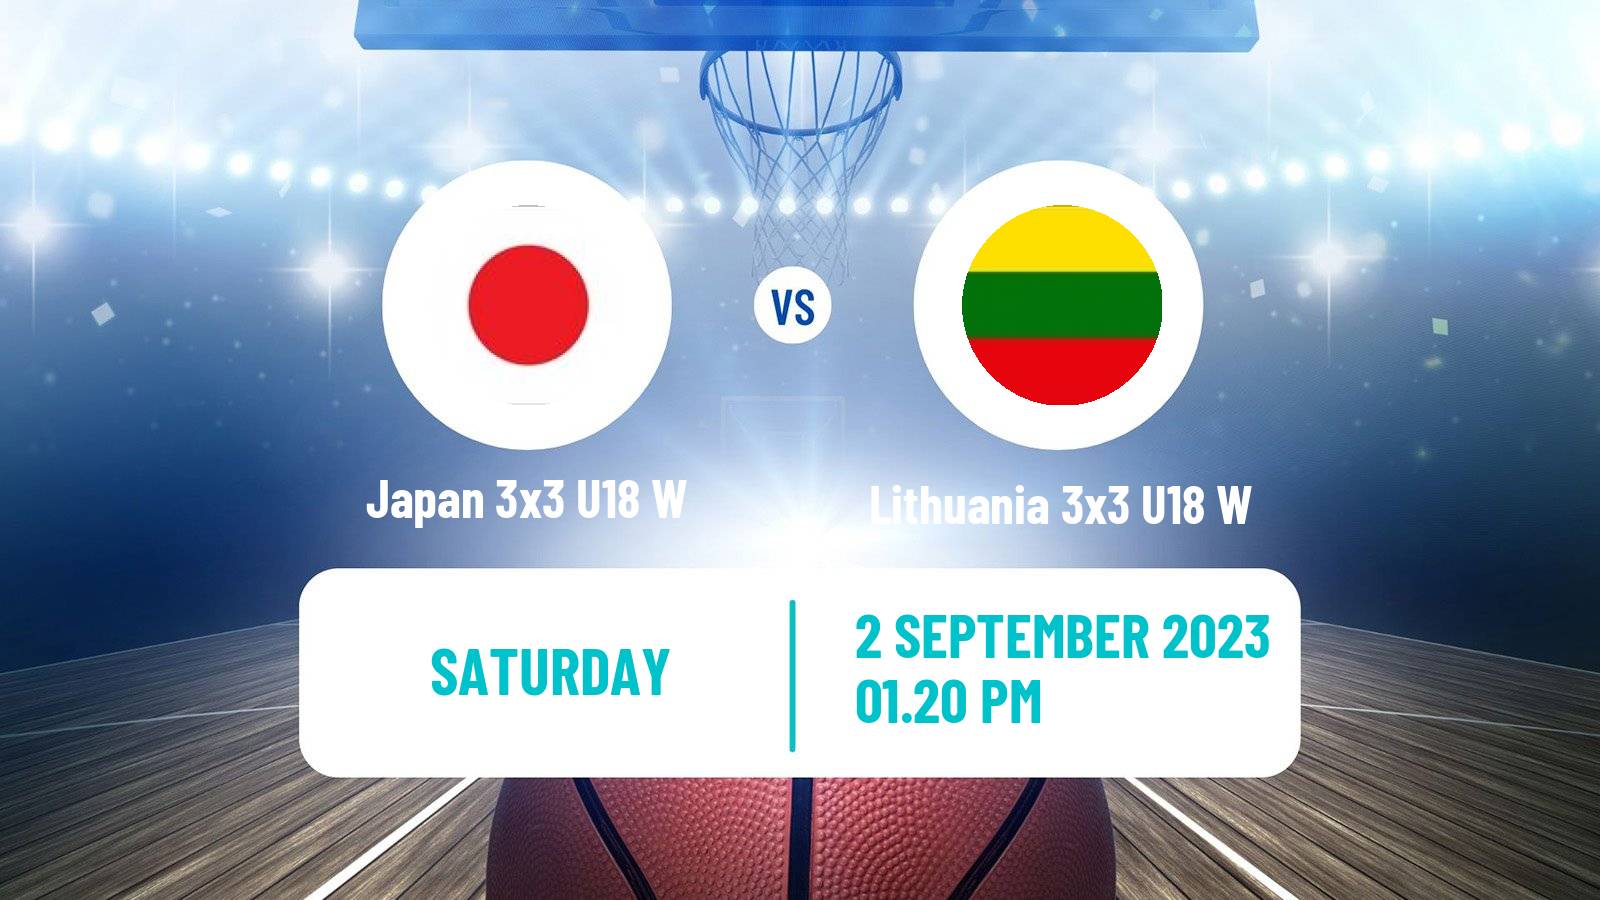 Basketball World Cup Basketball 3x3 U18 Women Japan 3x3 U18 W - Lithuania 3x3 U18 W